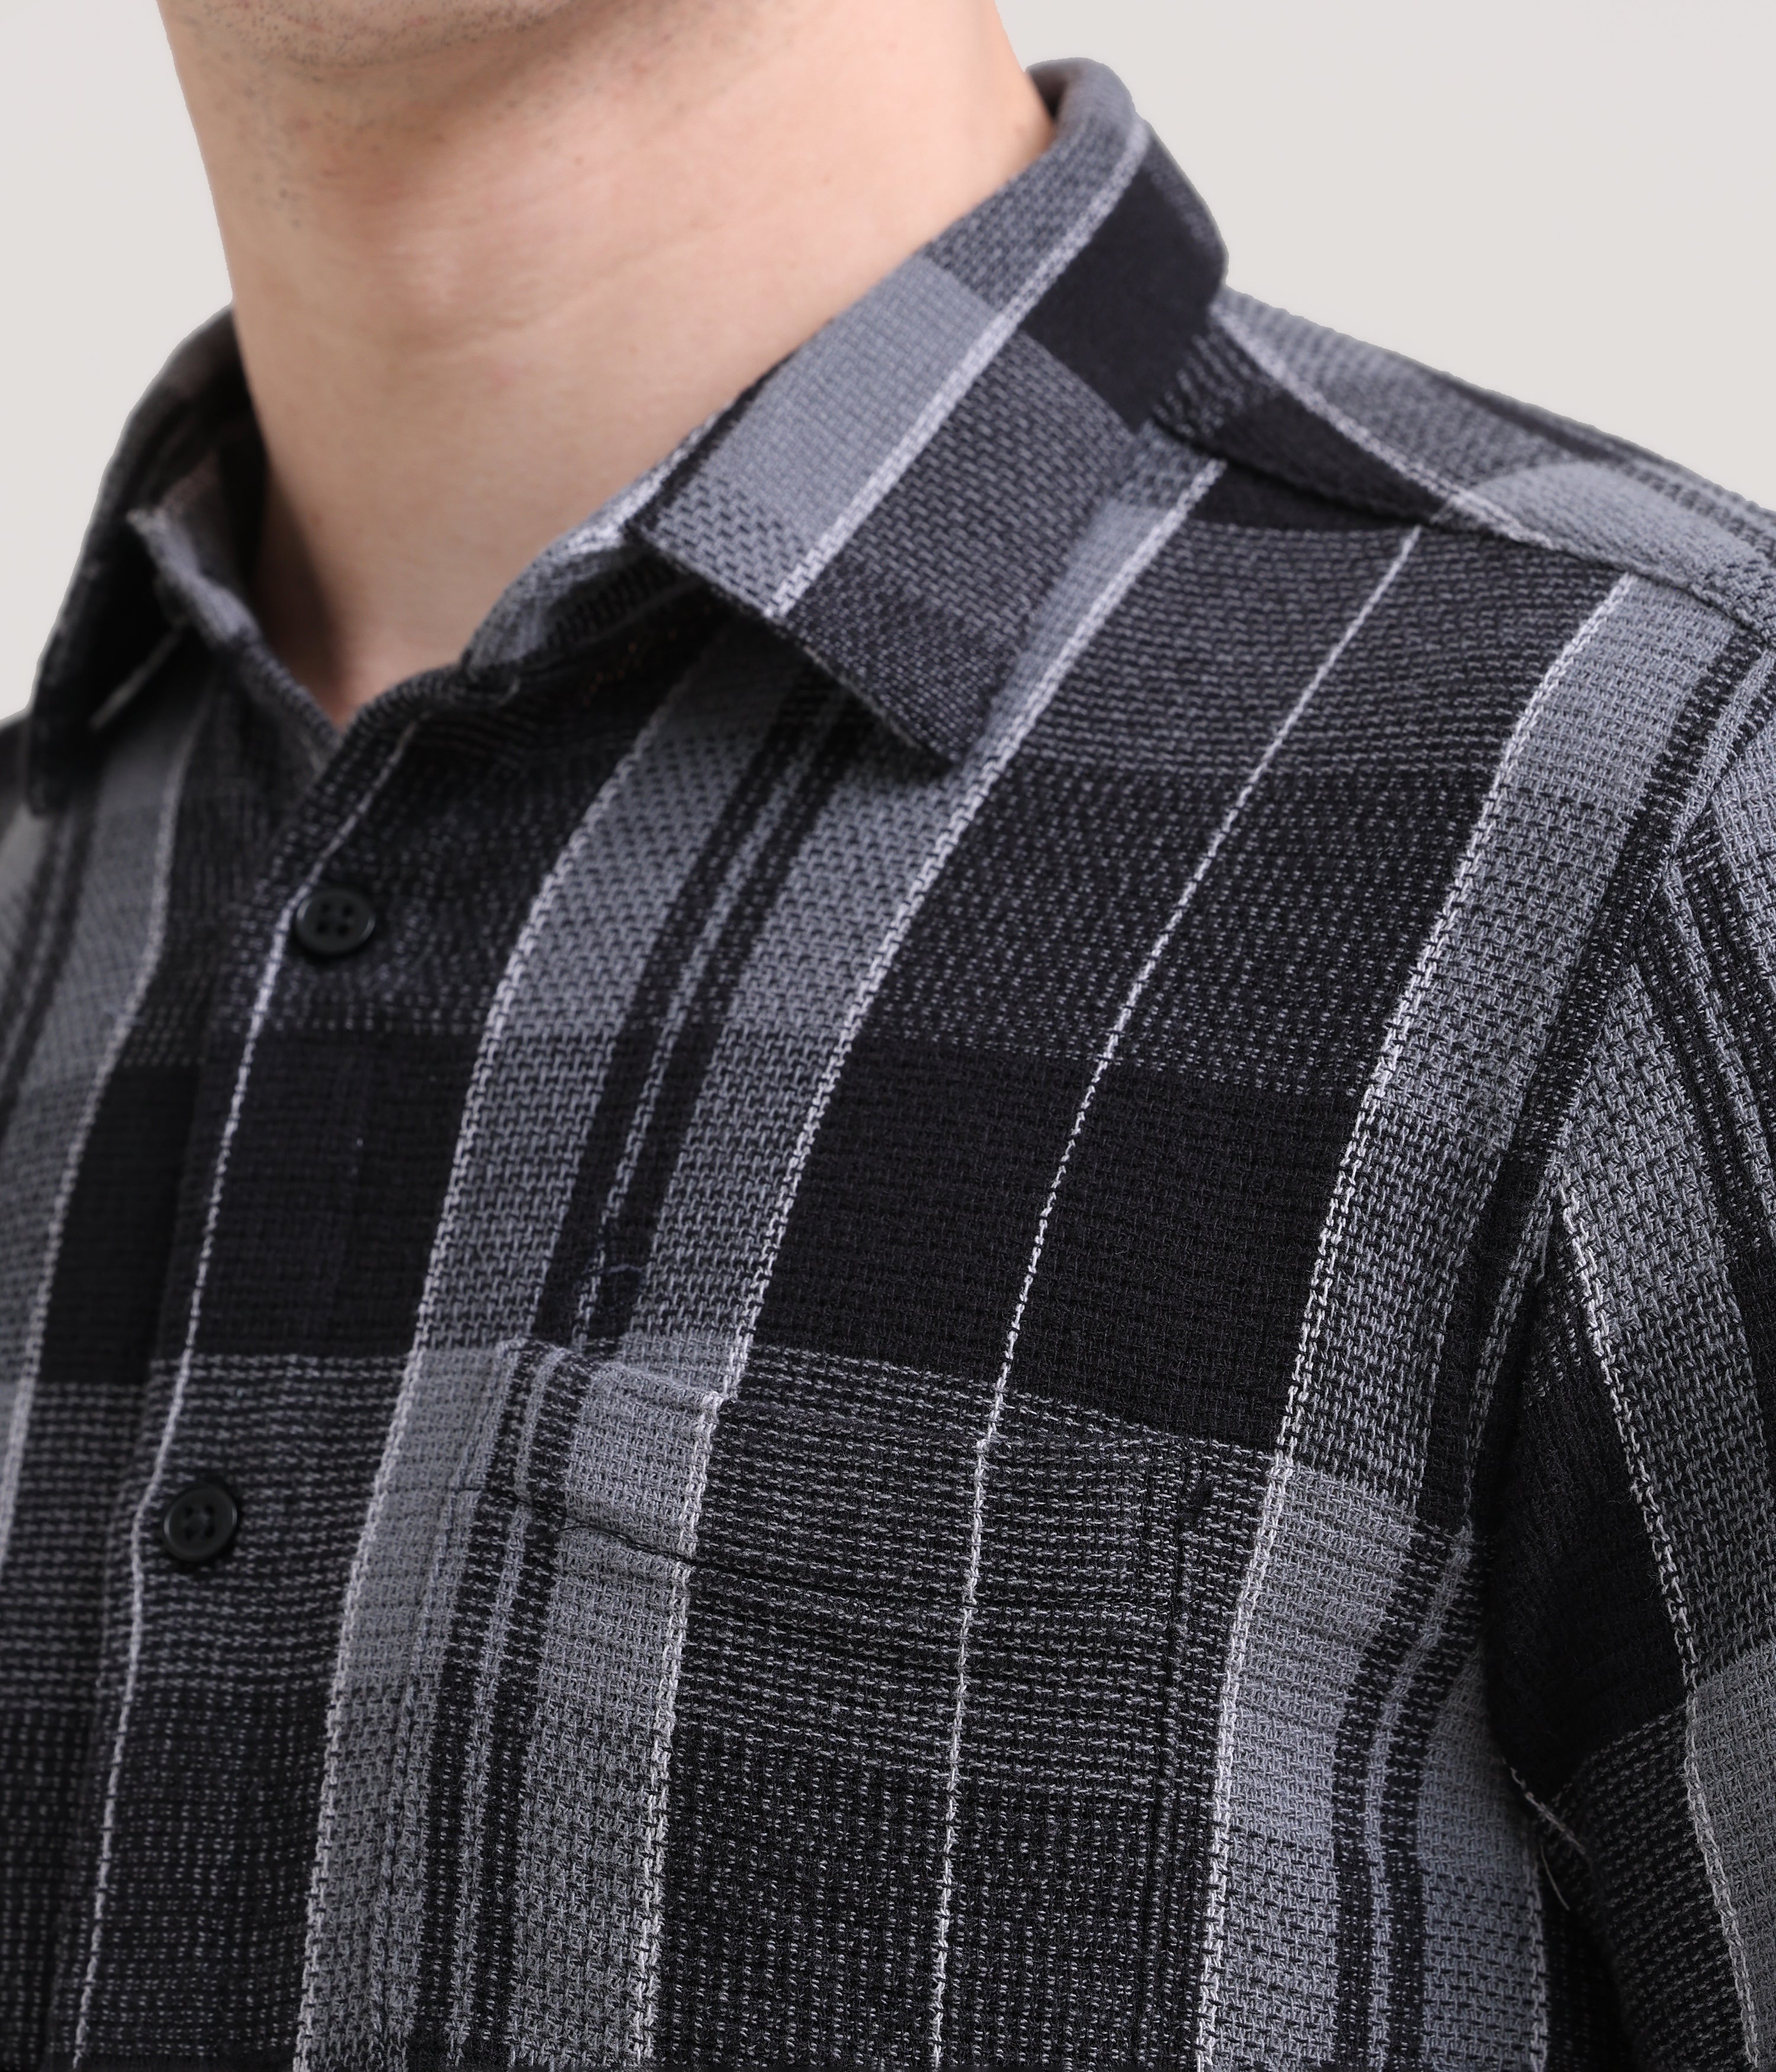 Midnight Checkmate: Checkered Black Full Sleeve Slim Fit Shirt